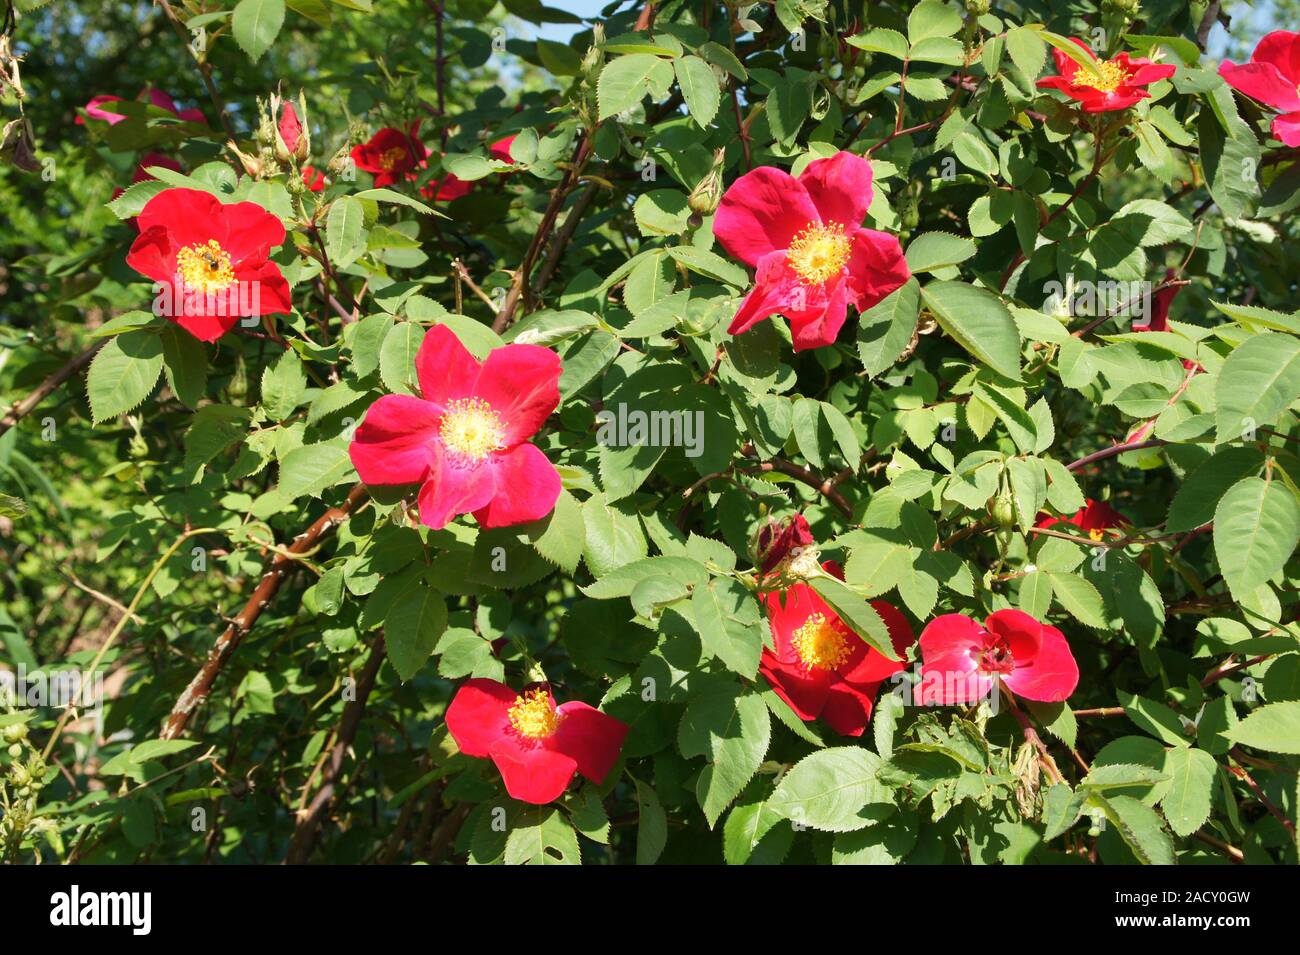 Gallic rose -Fotos und -Bildmaterial in hoher Auflösung – Alamy